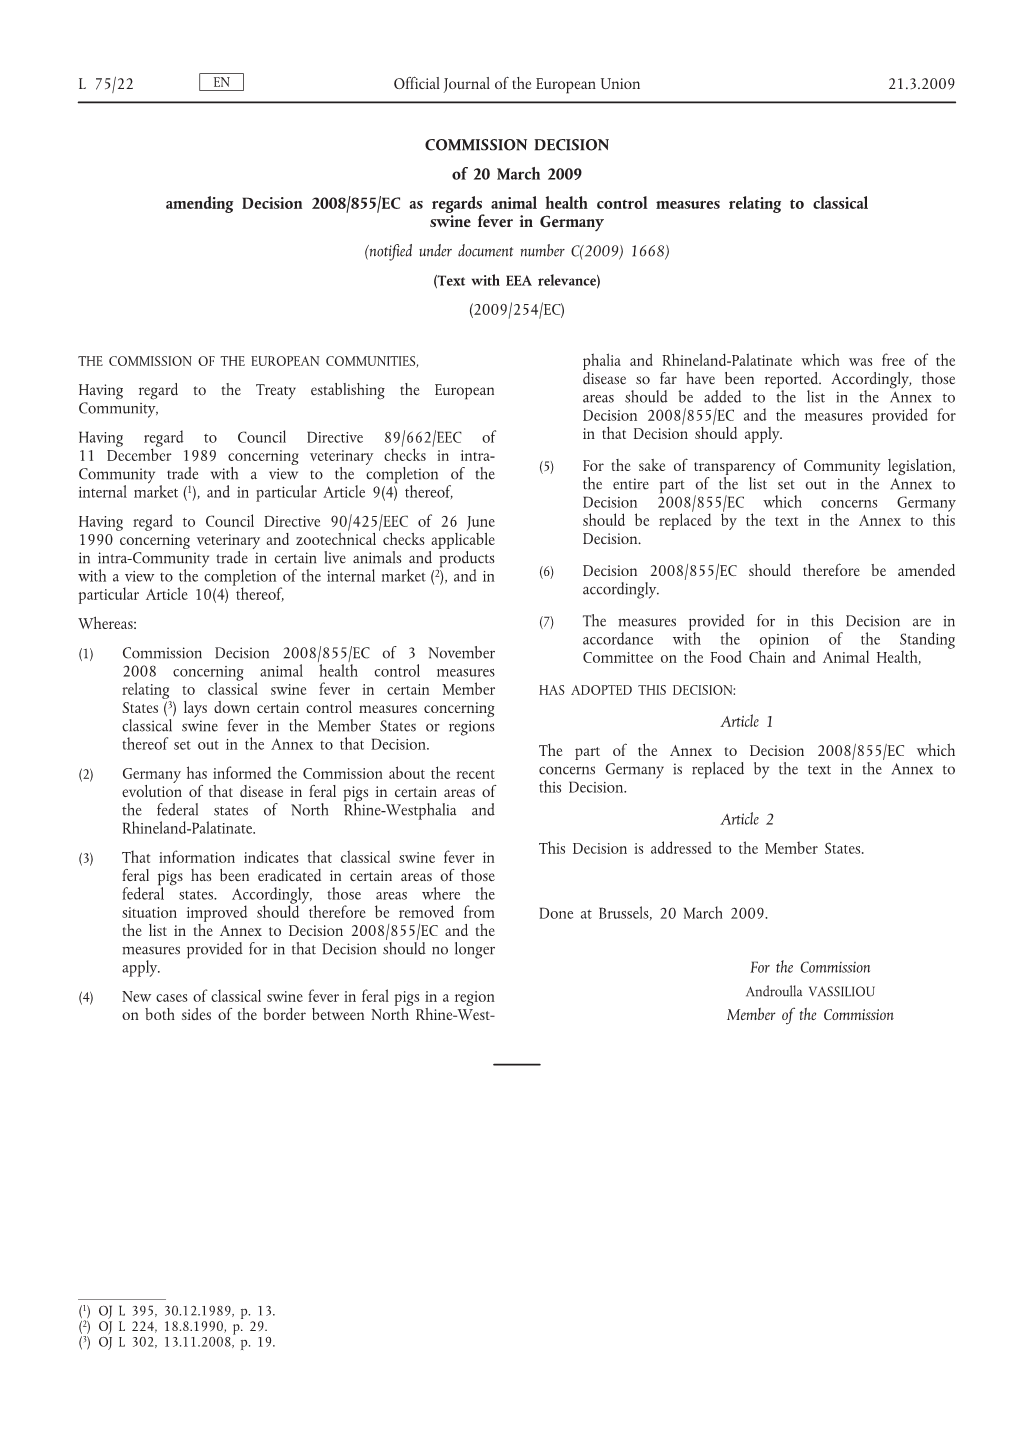 COMMISSION DECISION of 20 March 2009 Amending Decision 2008/855